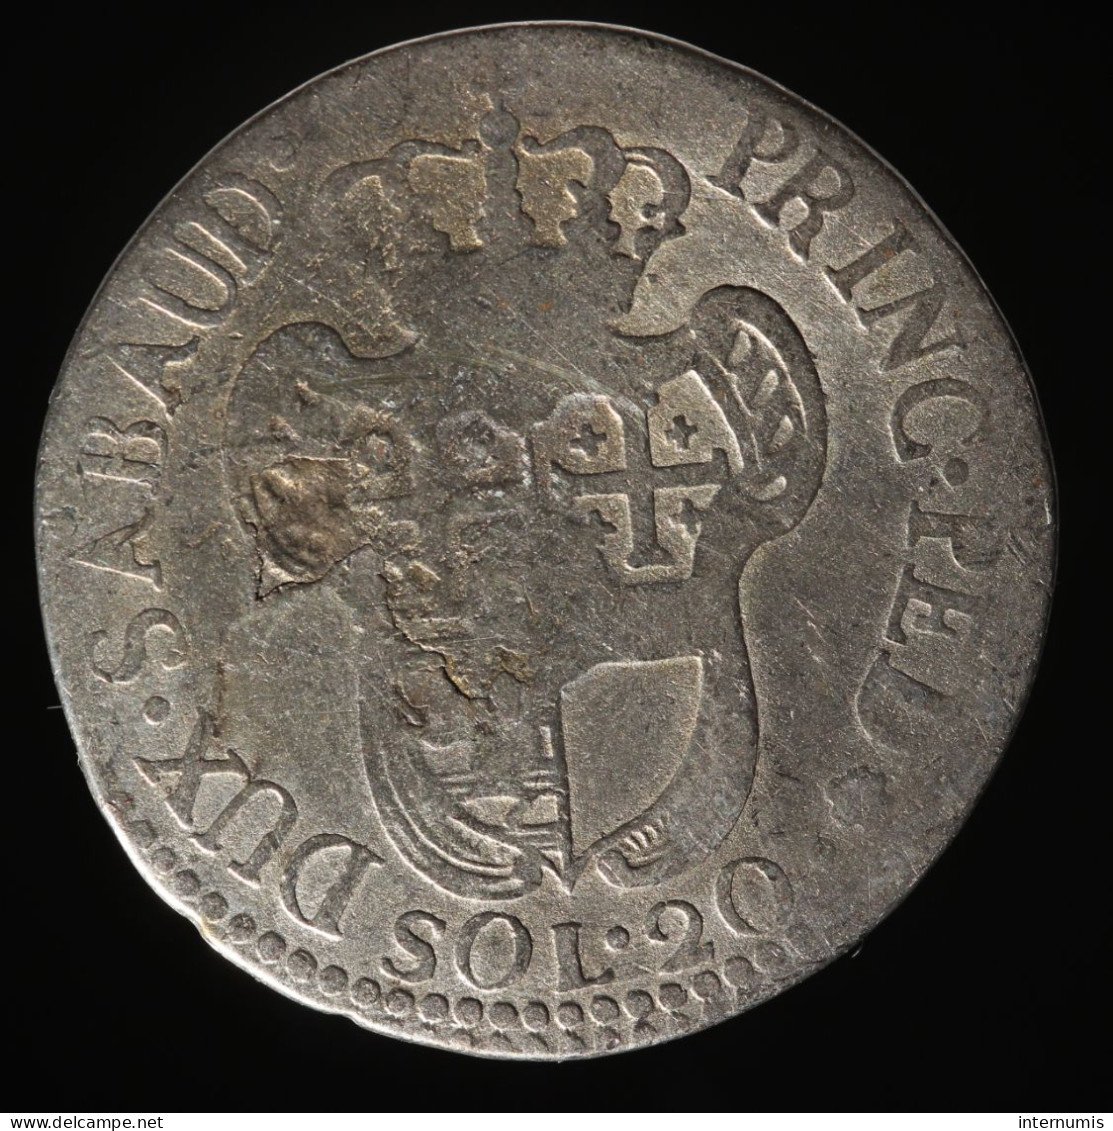  Savoie / Savoy, Victor-Amédée II, 20 Soldi, 1796, , Billon, TB (F),
KM#94, MIR# 990  - Piamonte-Sardaigne-Savoie Italiana